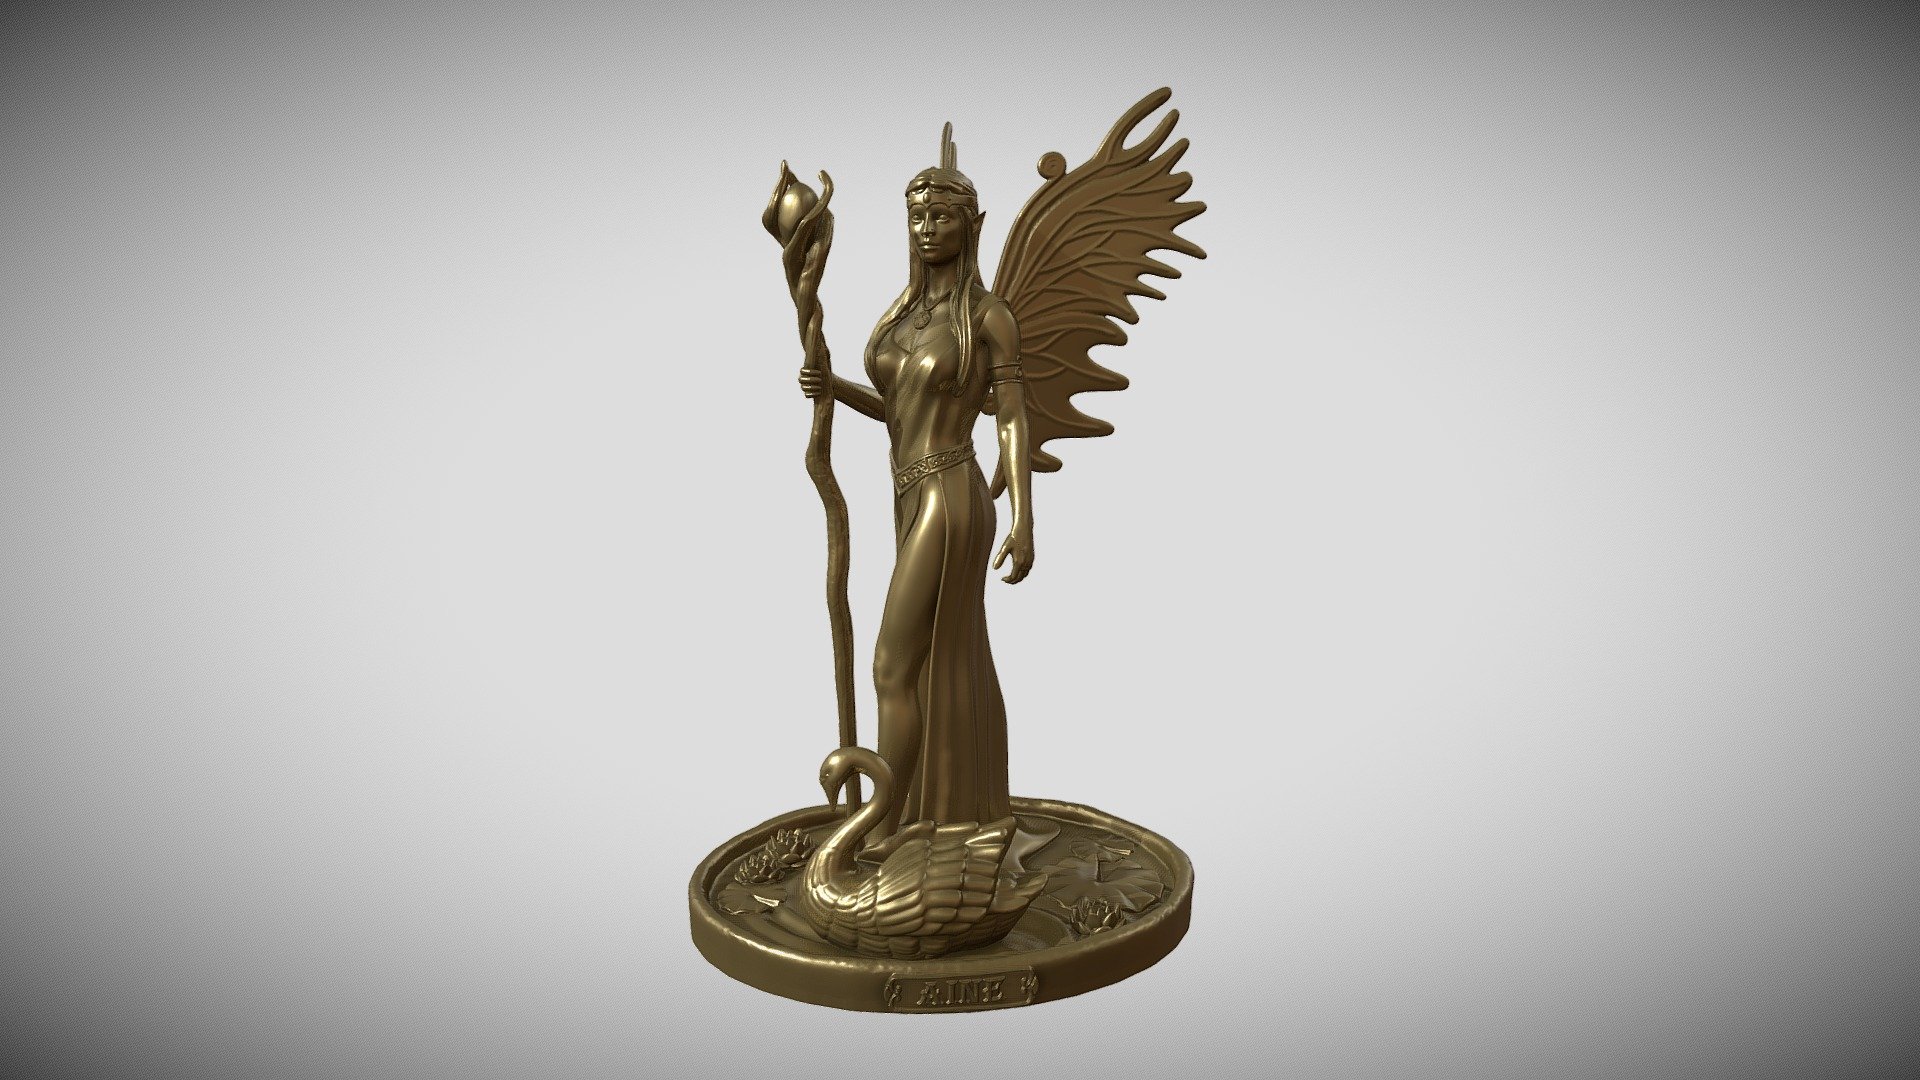 Aine celtic goddess fairy queen druid 3D print model - Aine celtic goddess fairy queen druid 3D model - 3D model by abauerenator 3d model